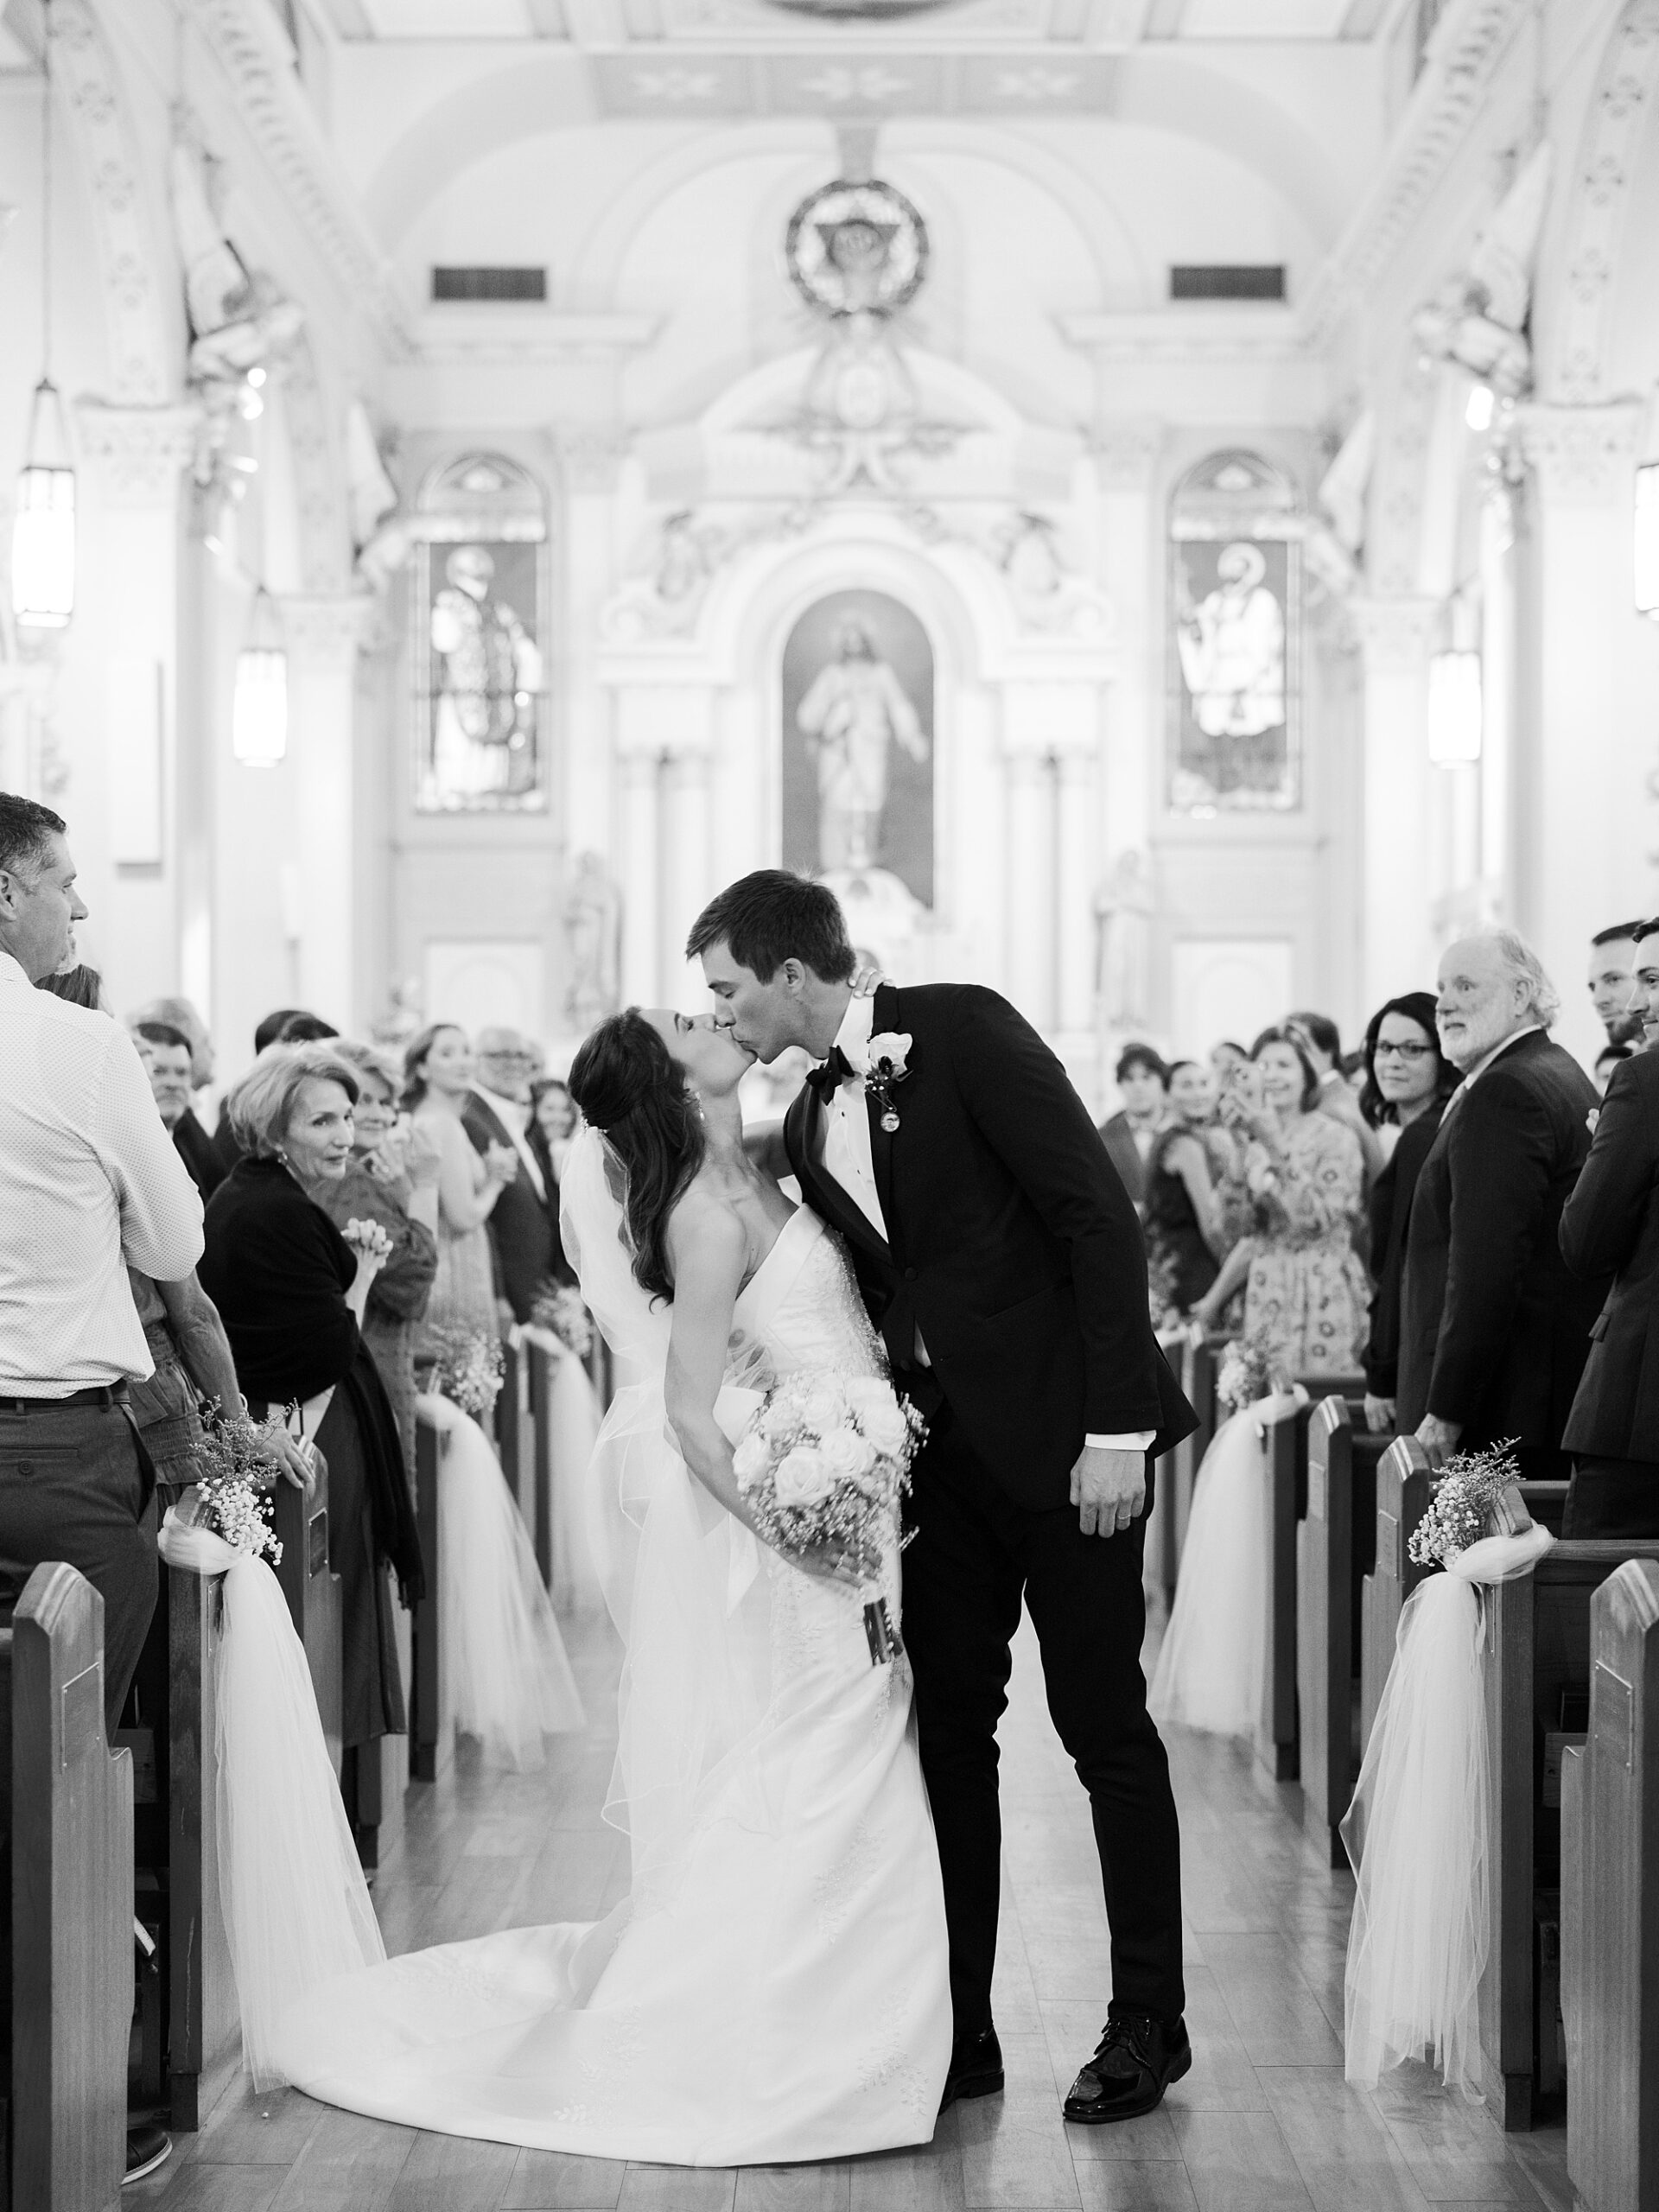 newlyweds kiss in aisle after traditional catholic wedding ceremony inside St. Charles Borromeo